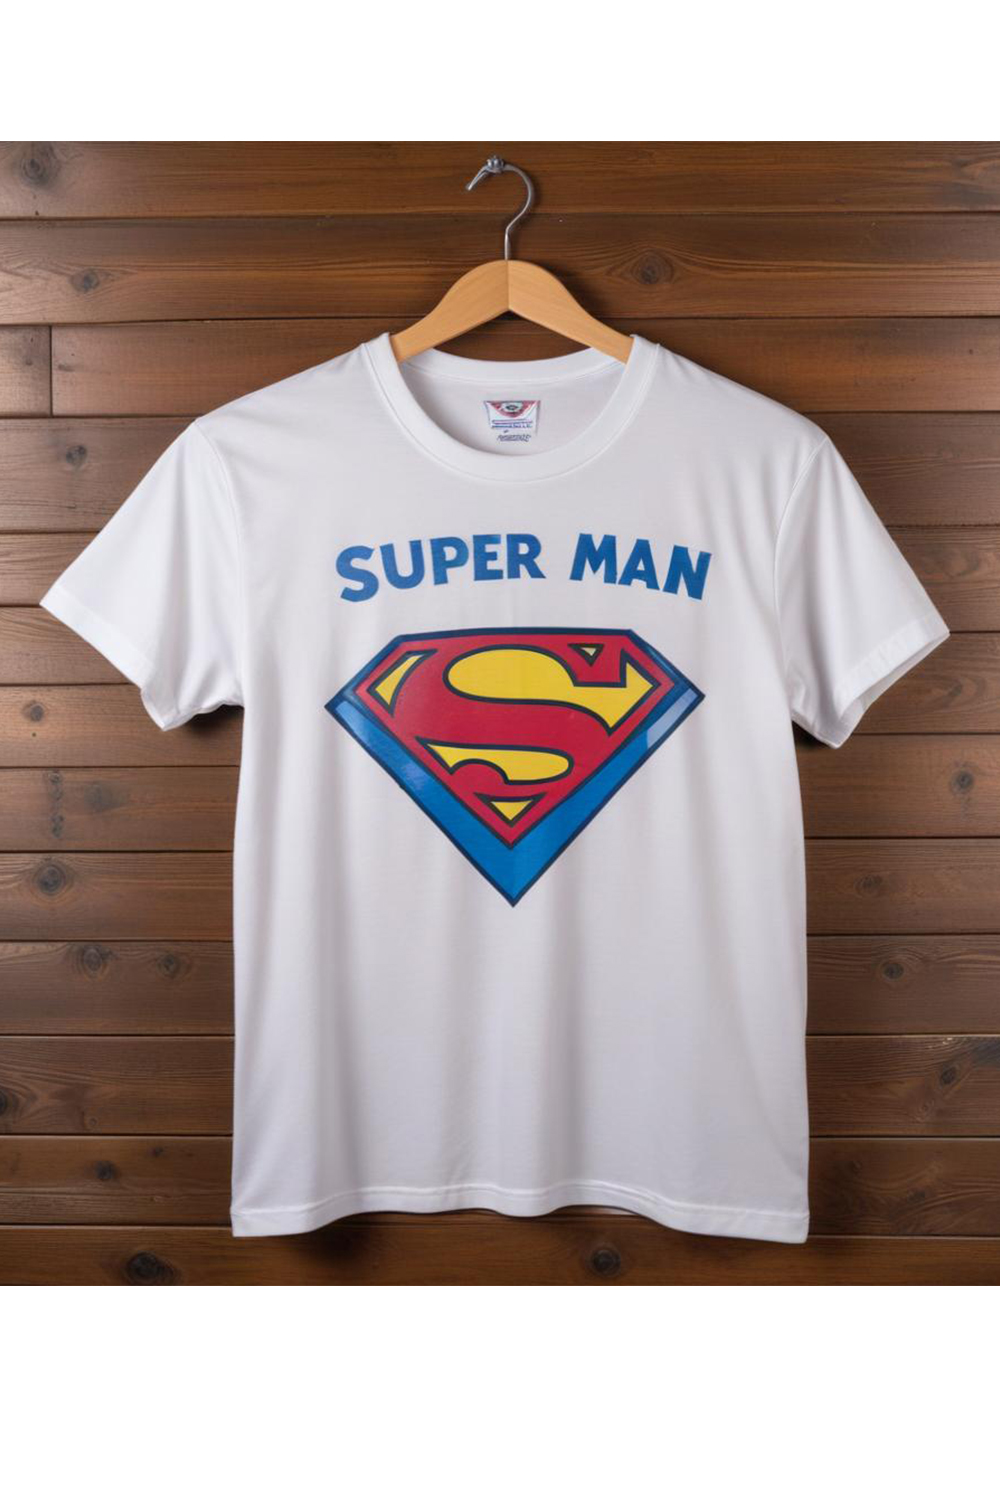 super man T-shirts pinterest preview image.